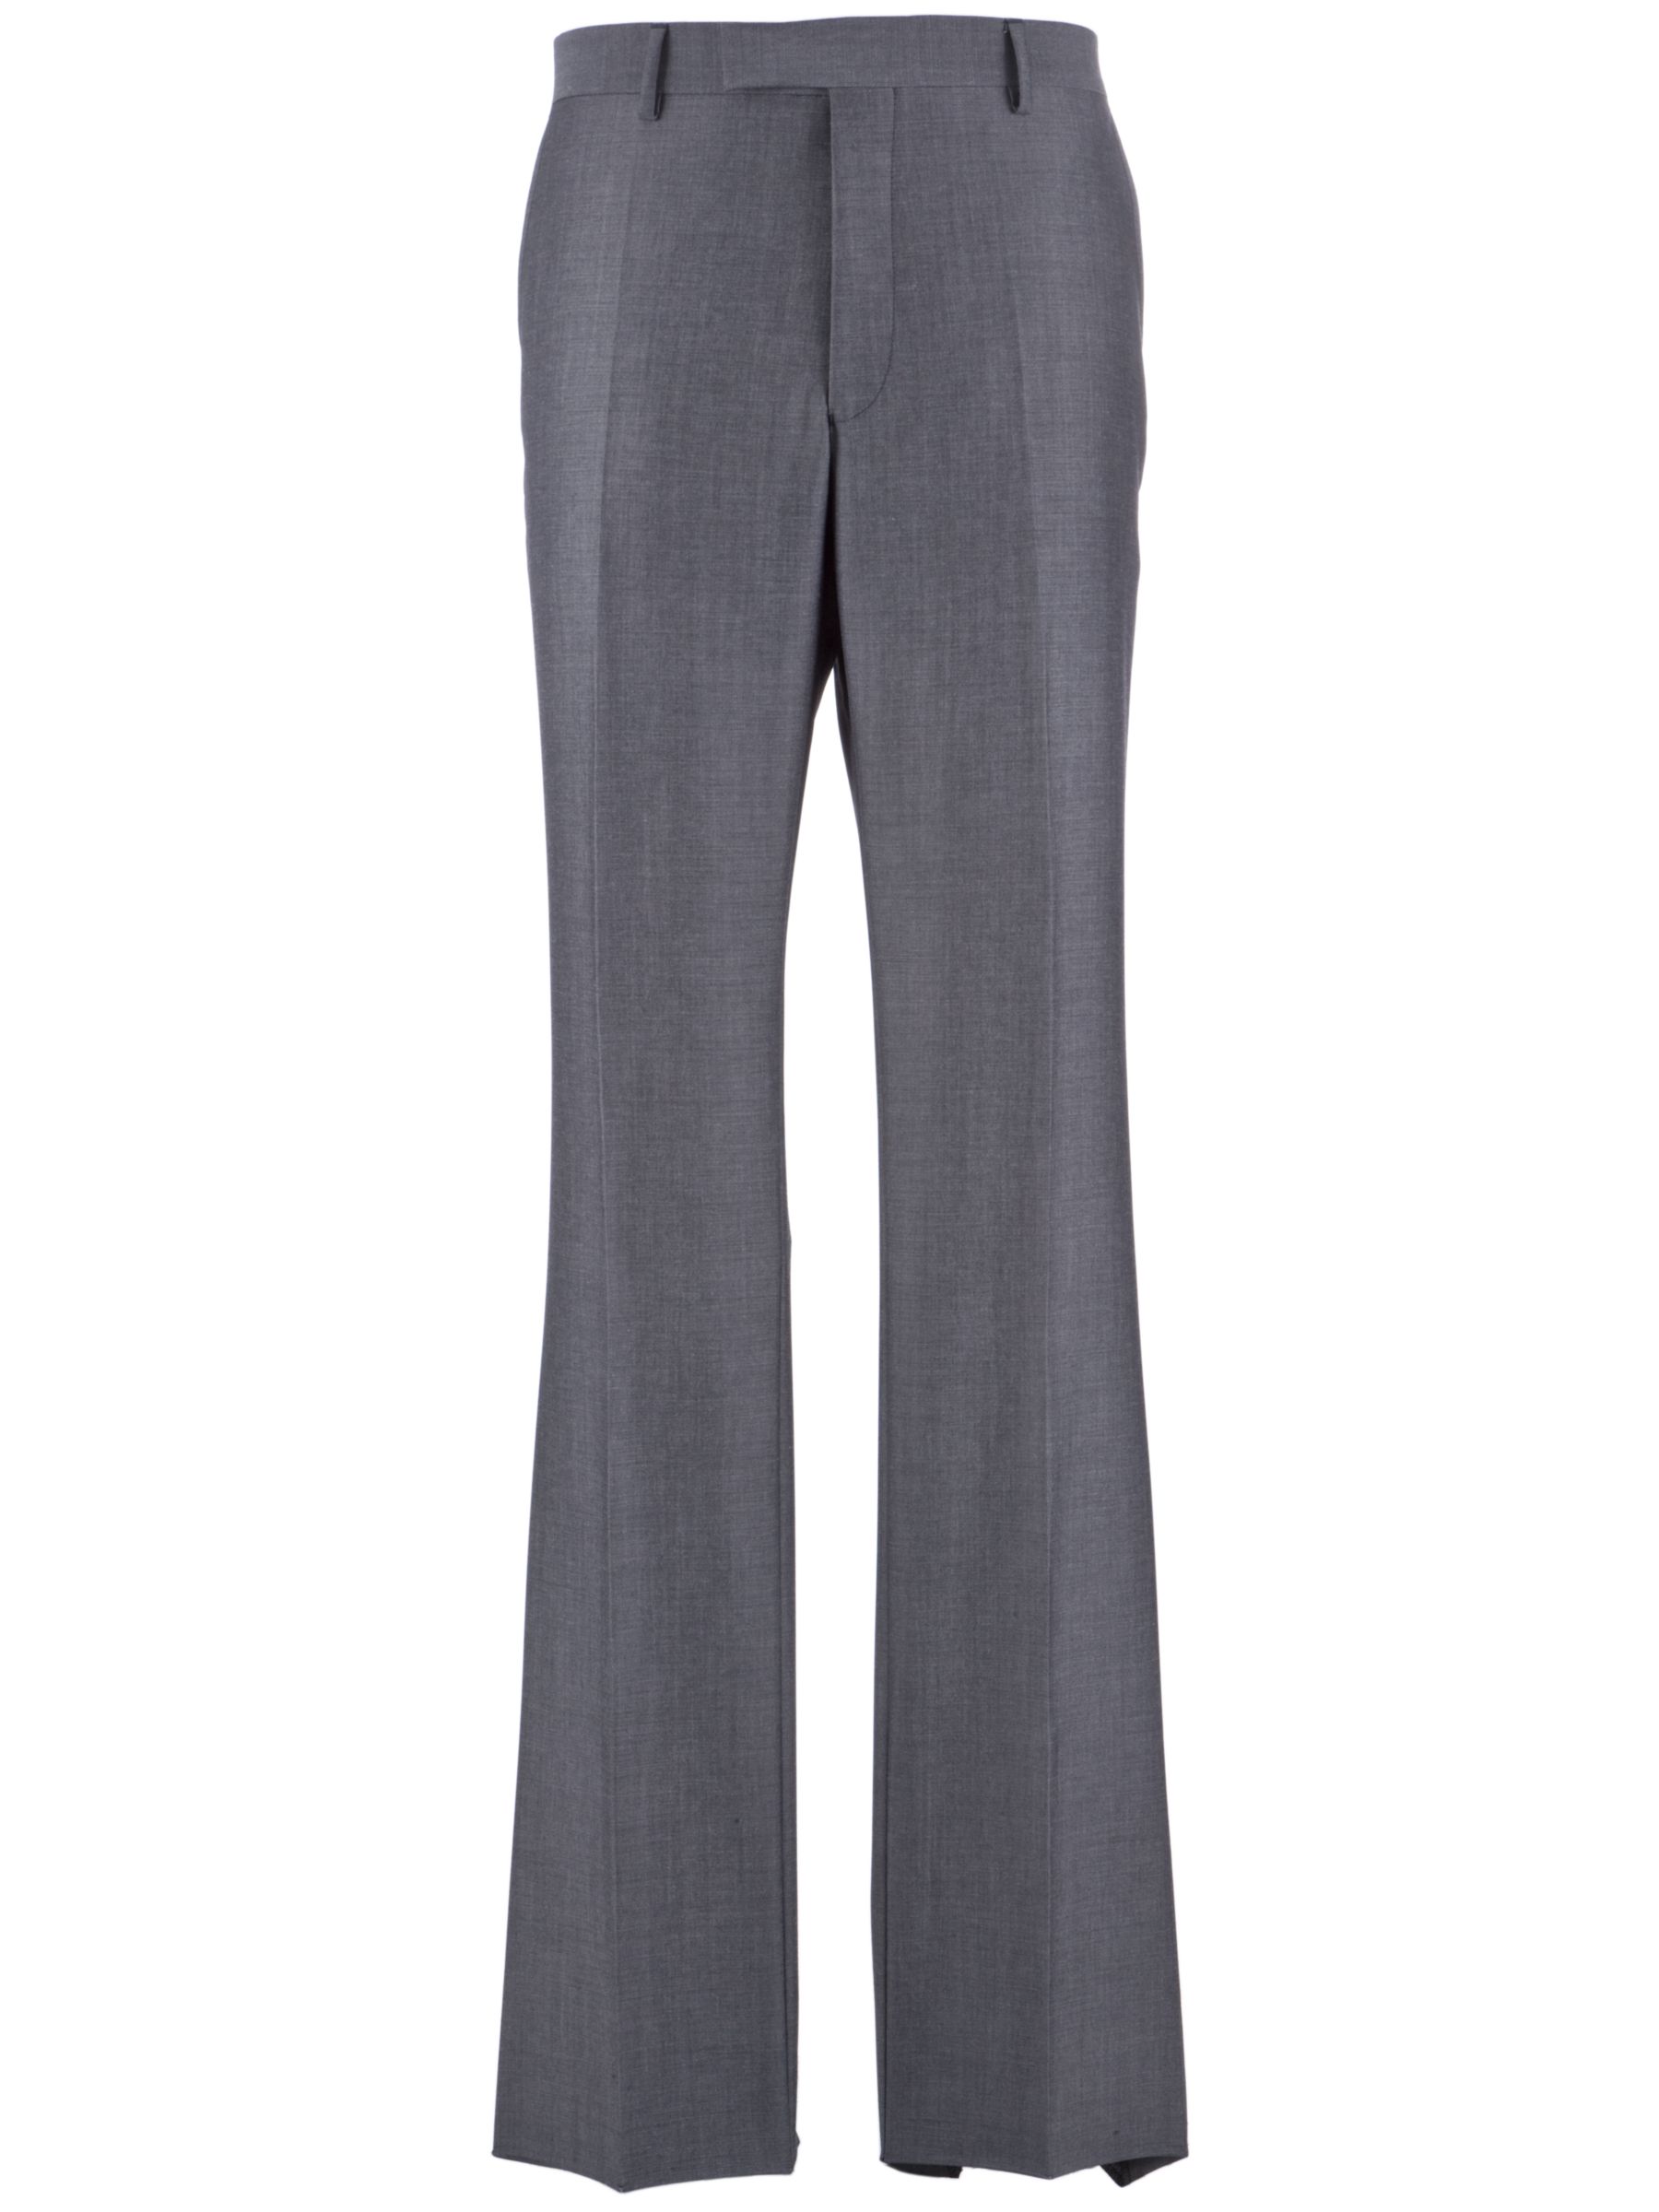 Mayfair Richard James Wool & Mohair Suit Trousers, Grey at John Lewis